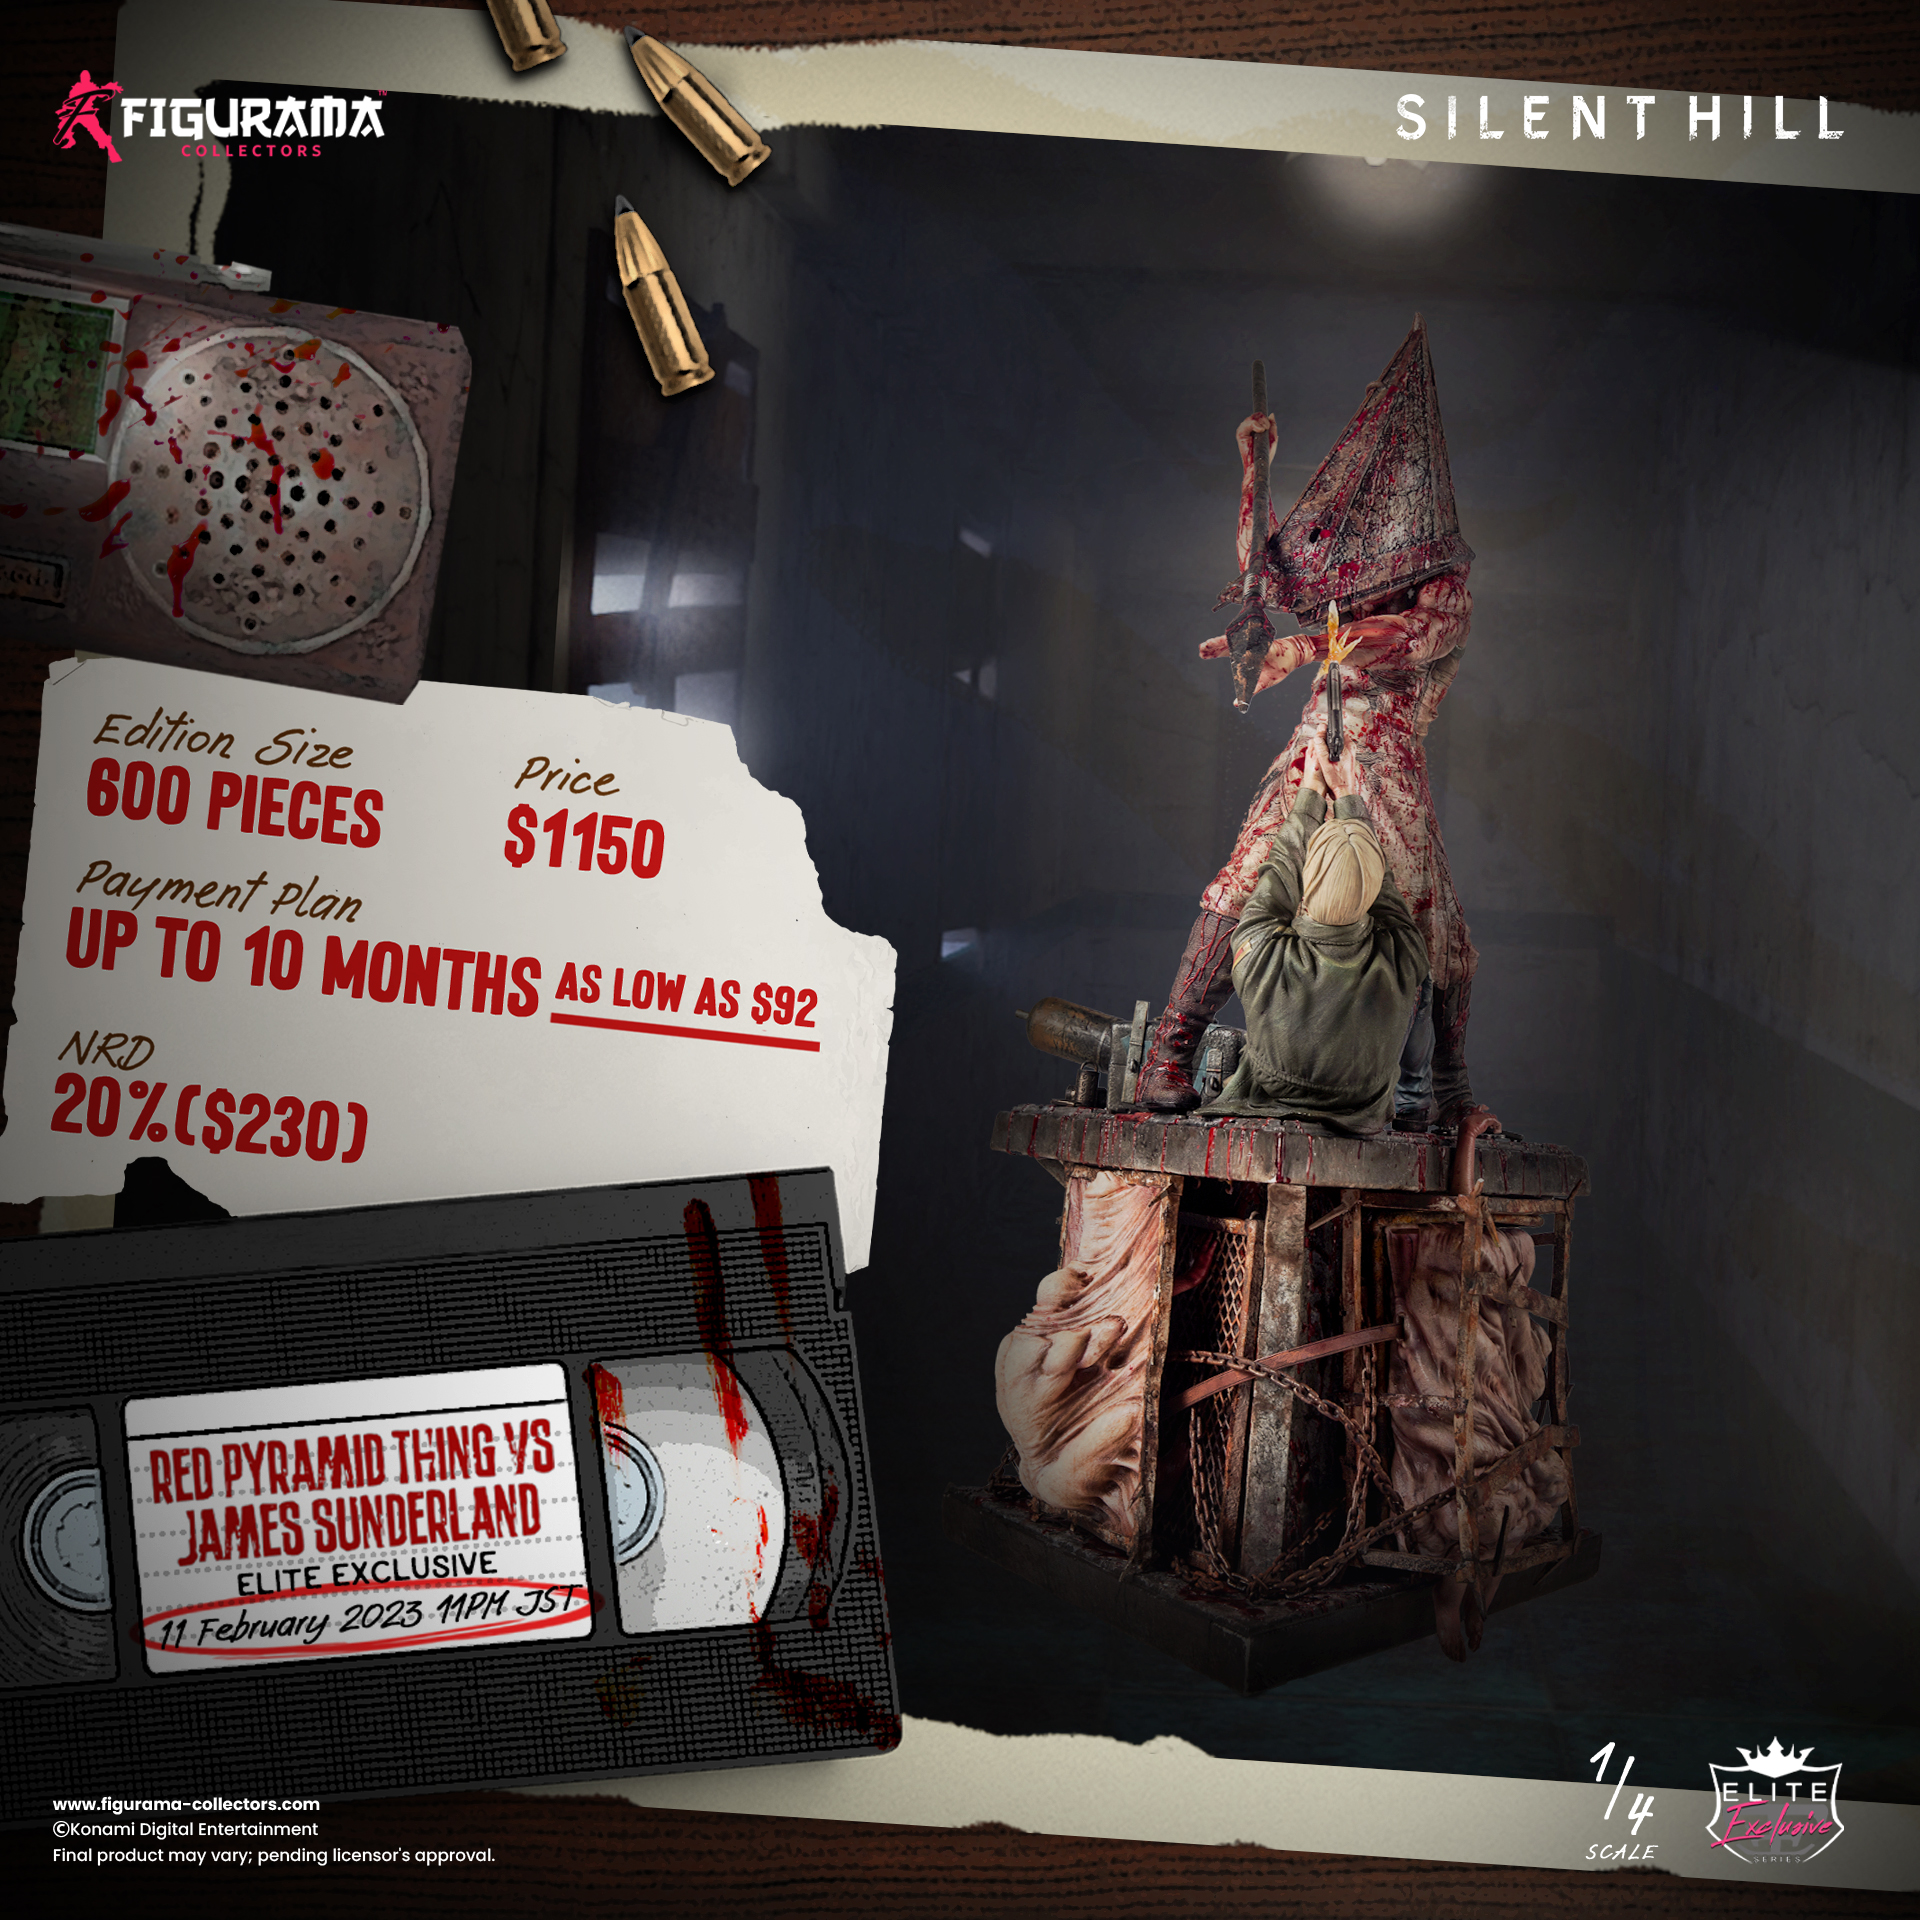 Silent Hill: Red Pyramid Thing vs James Sunderland Statue, pyramid head 